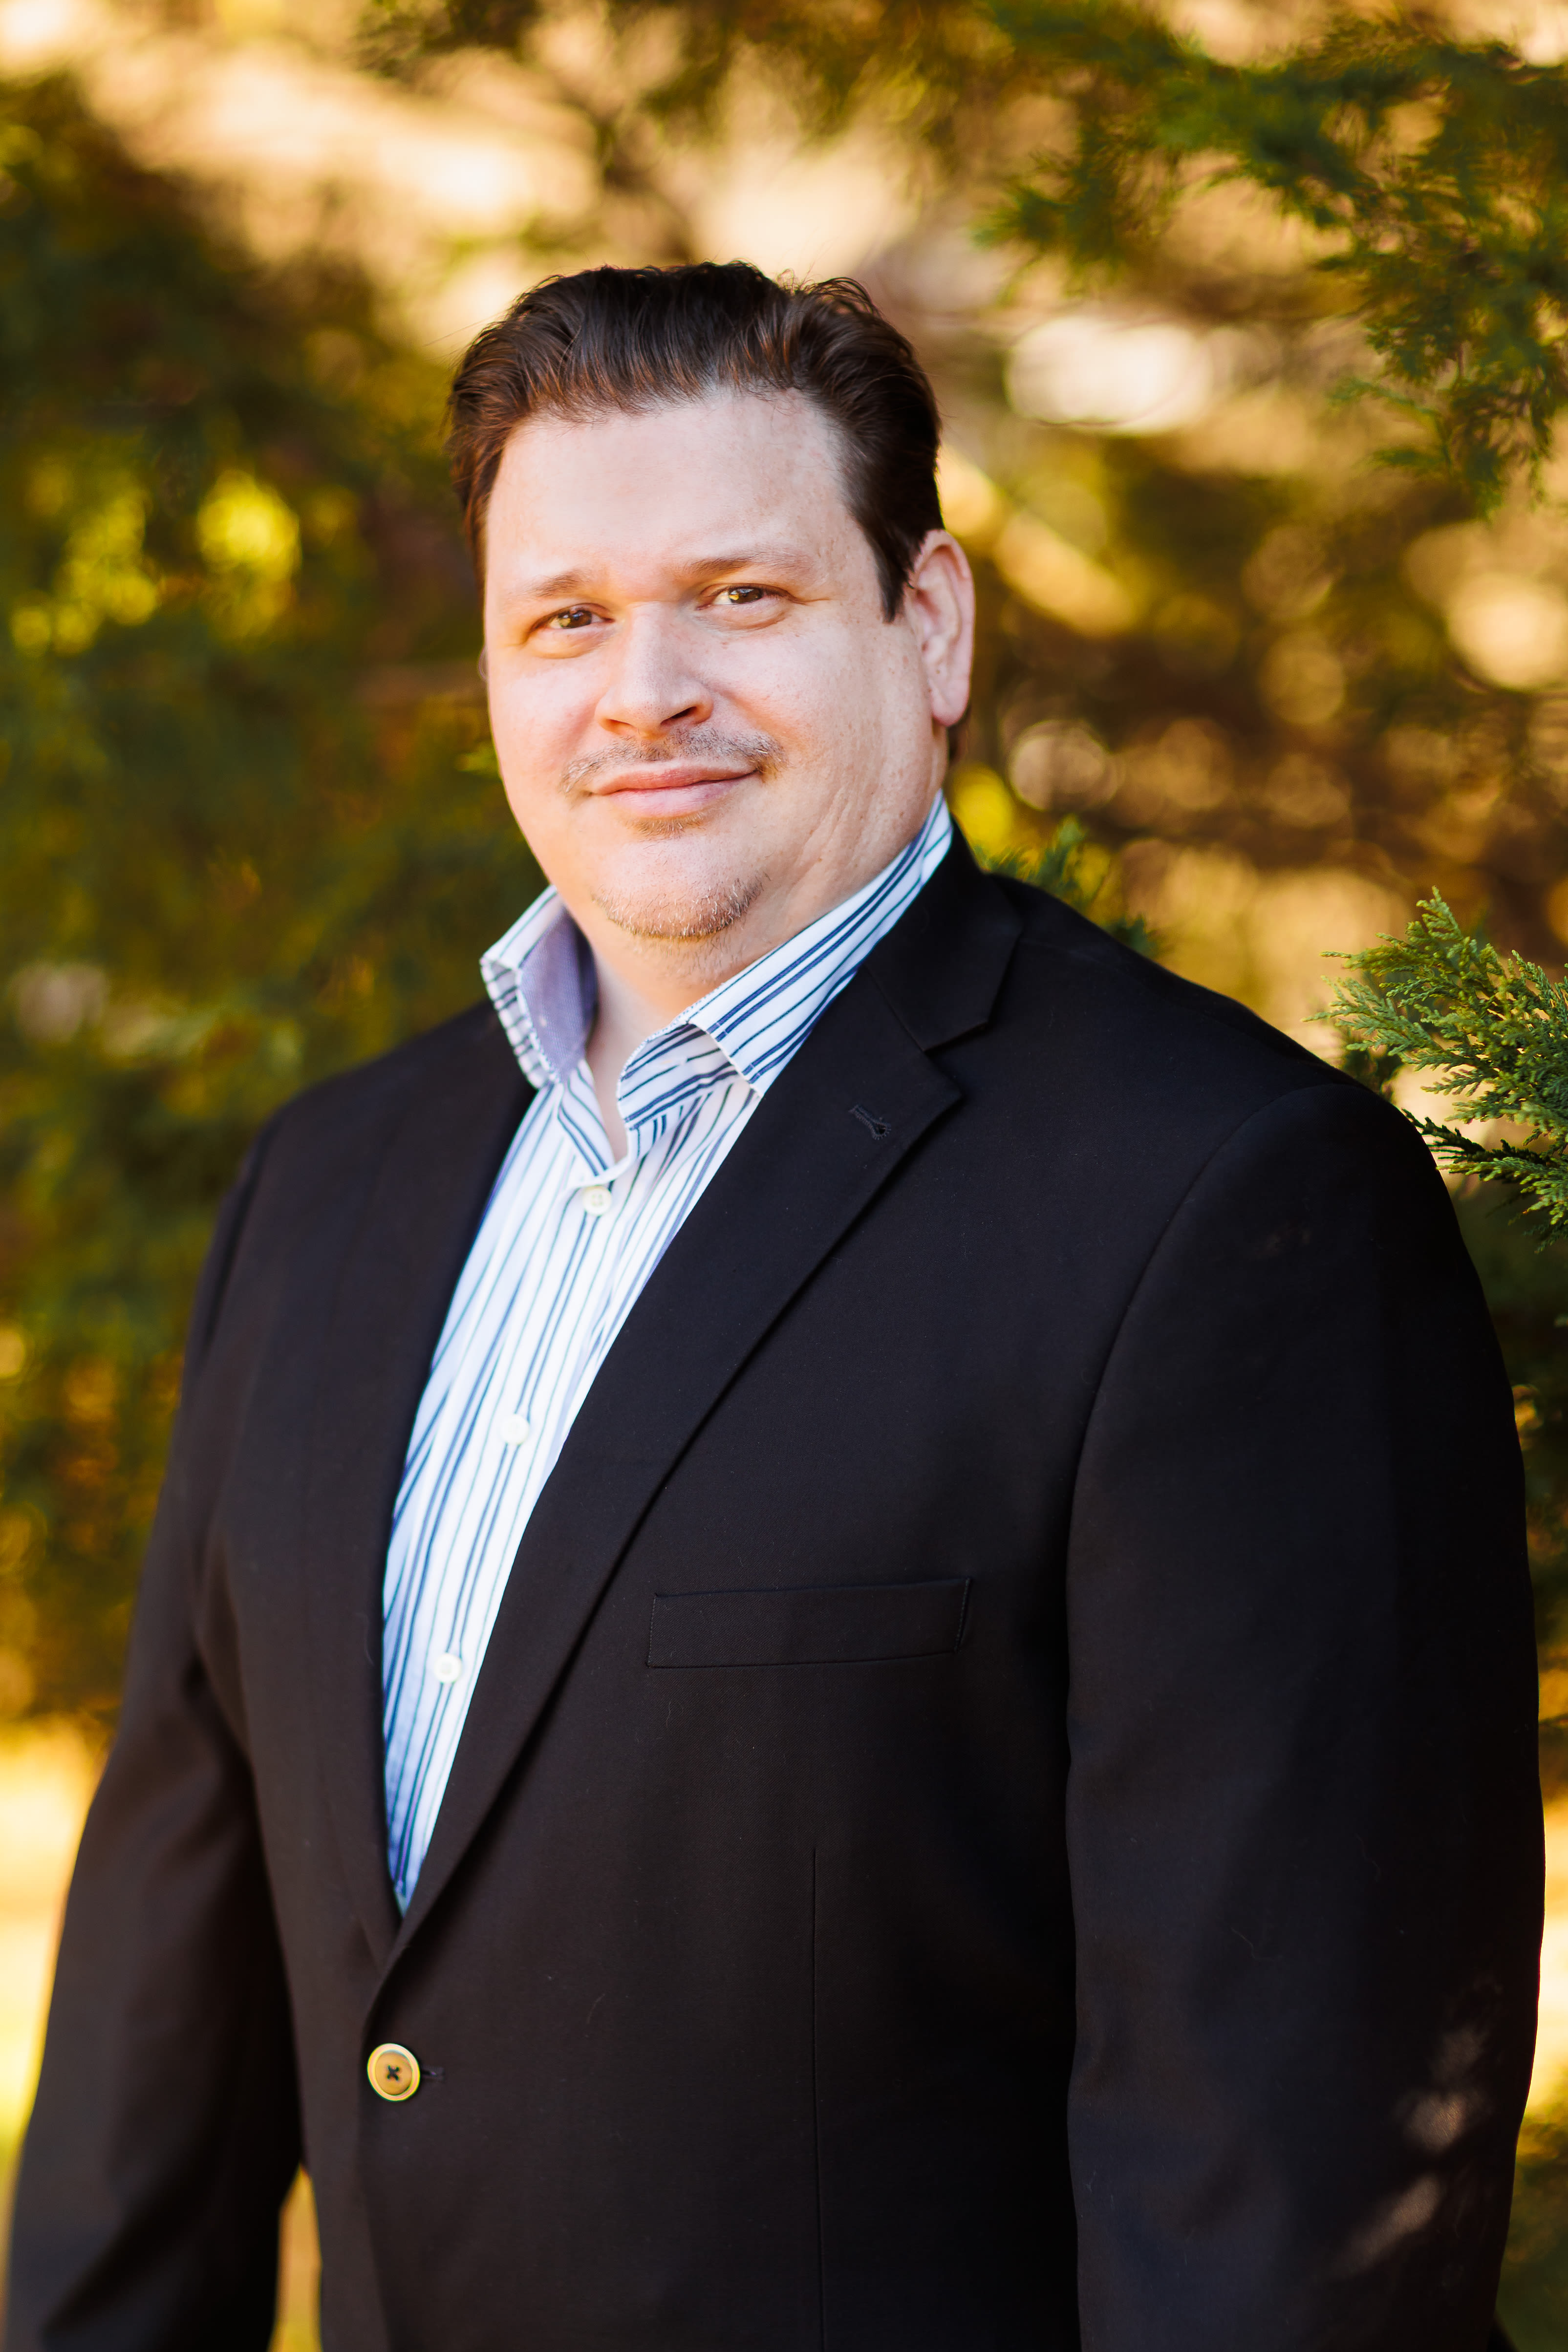 Lee Miller, Marketing Manager for S&S Property Management in Nashville, Tennessee